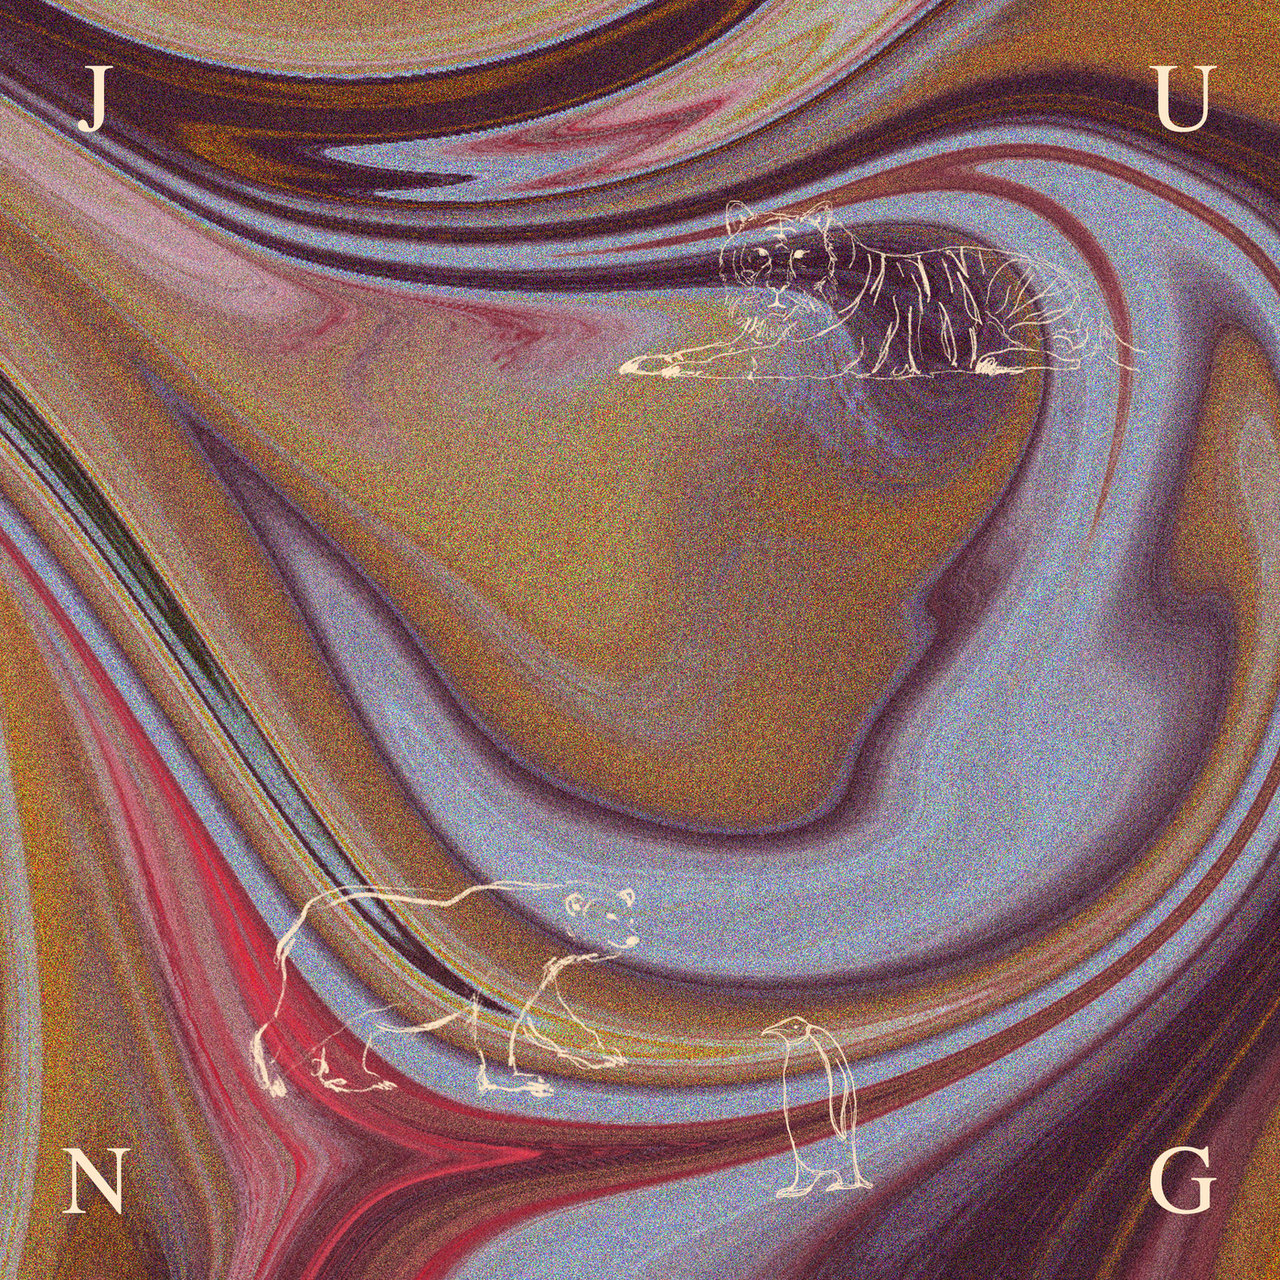 JUNG — Polar Bears cover artwork